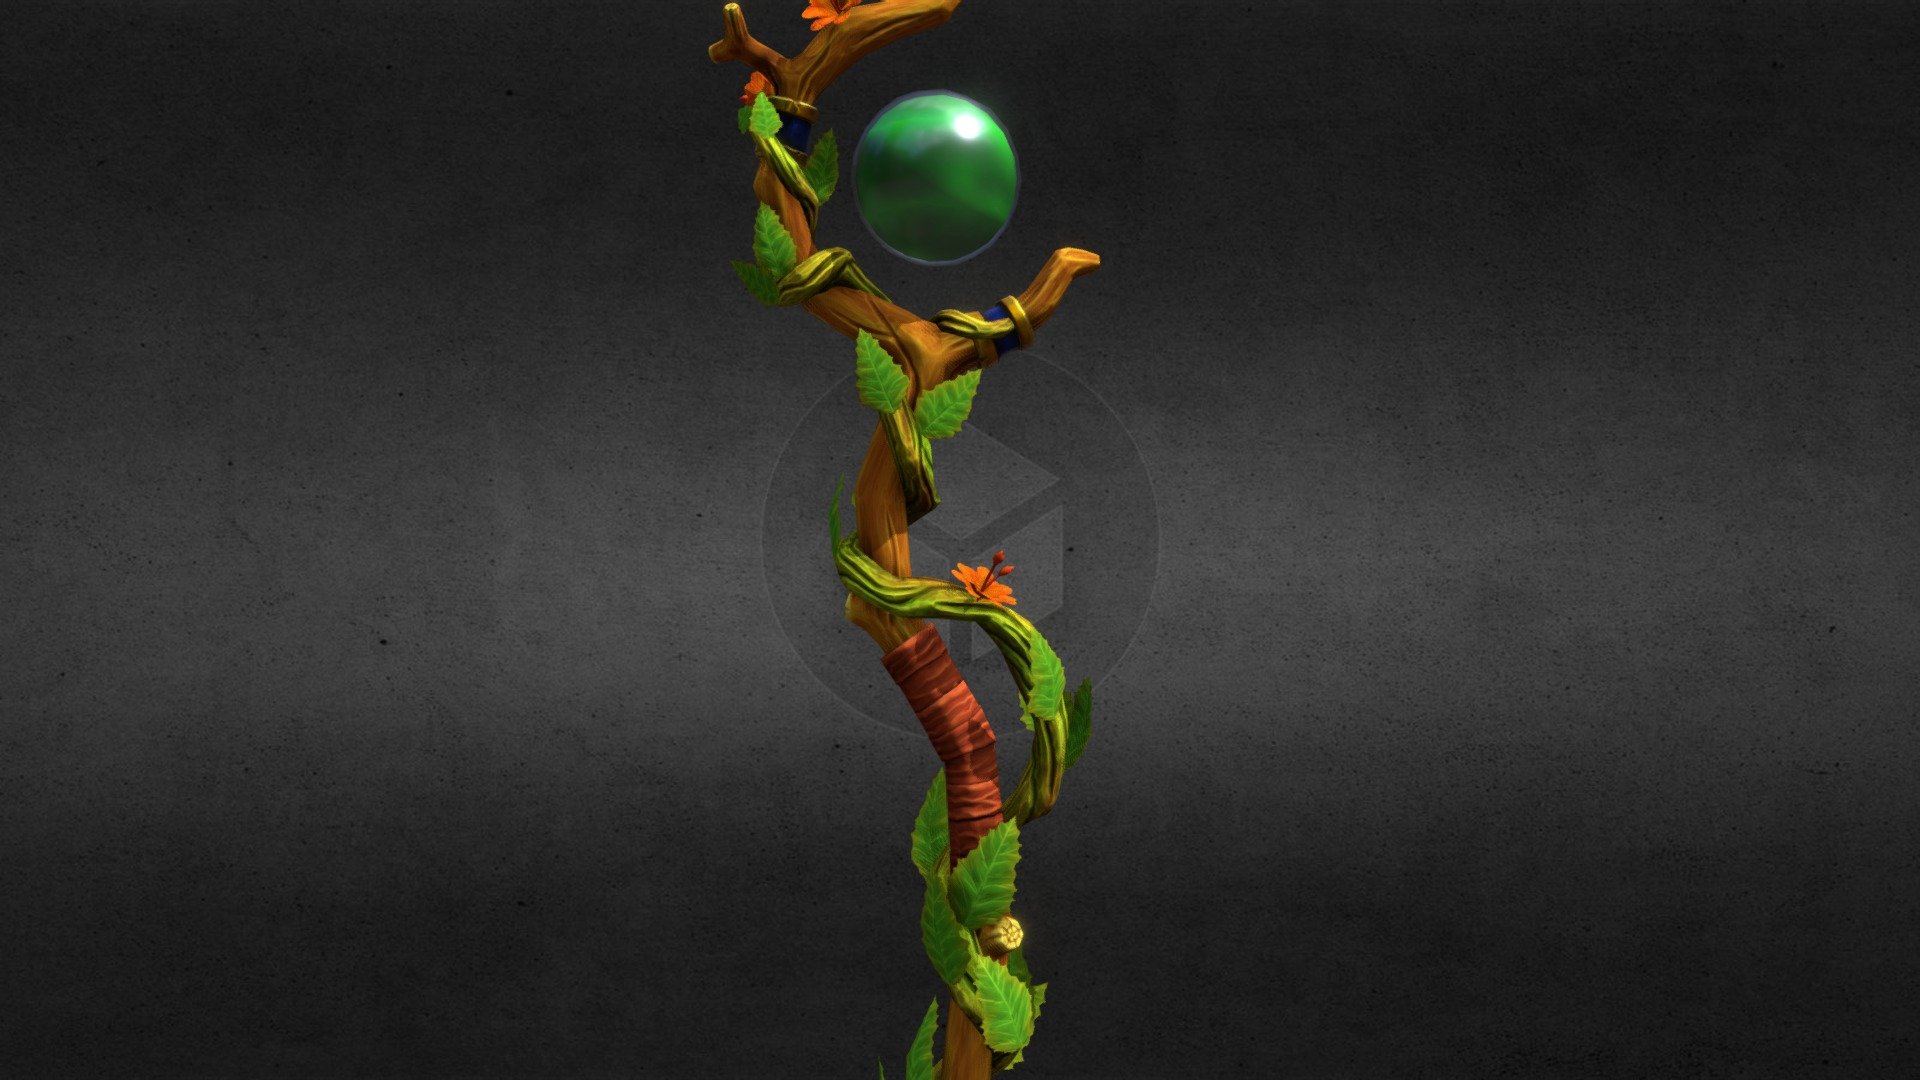 Low poly stylized druidic staff.
Hope you like 3d model